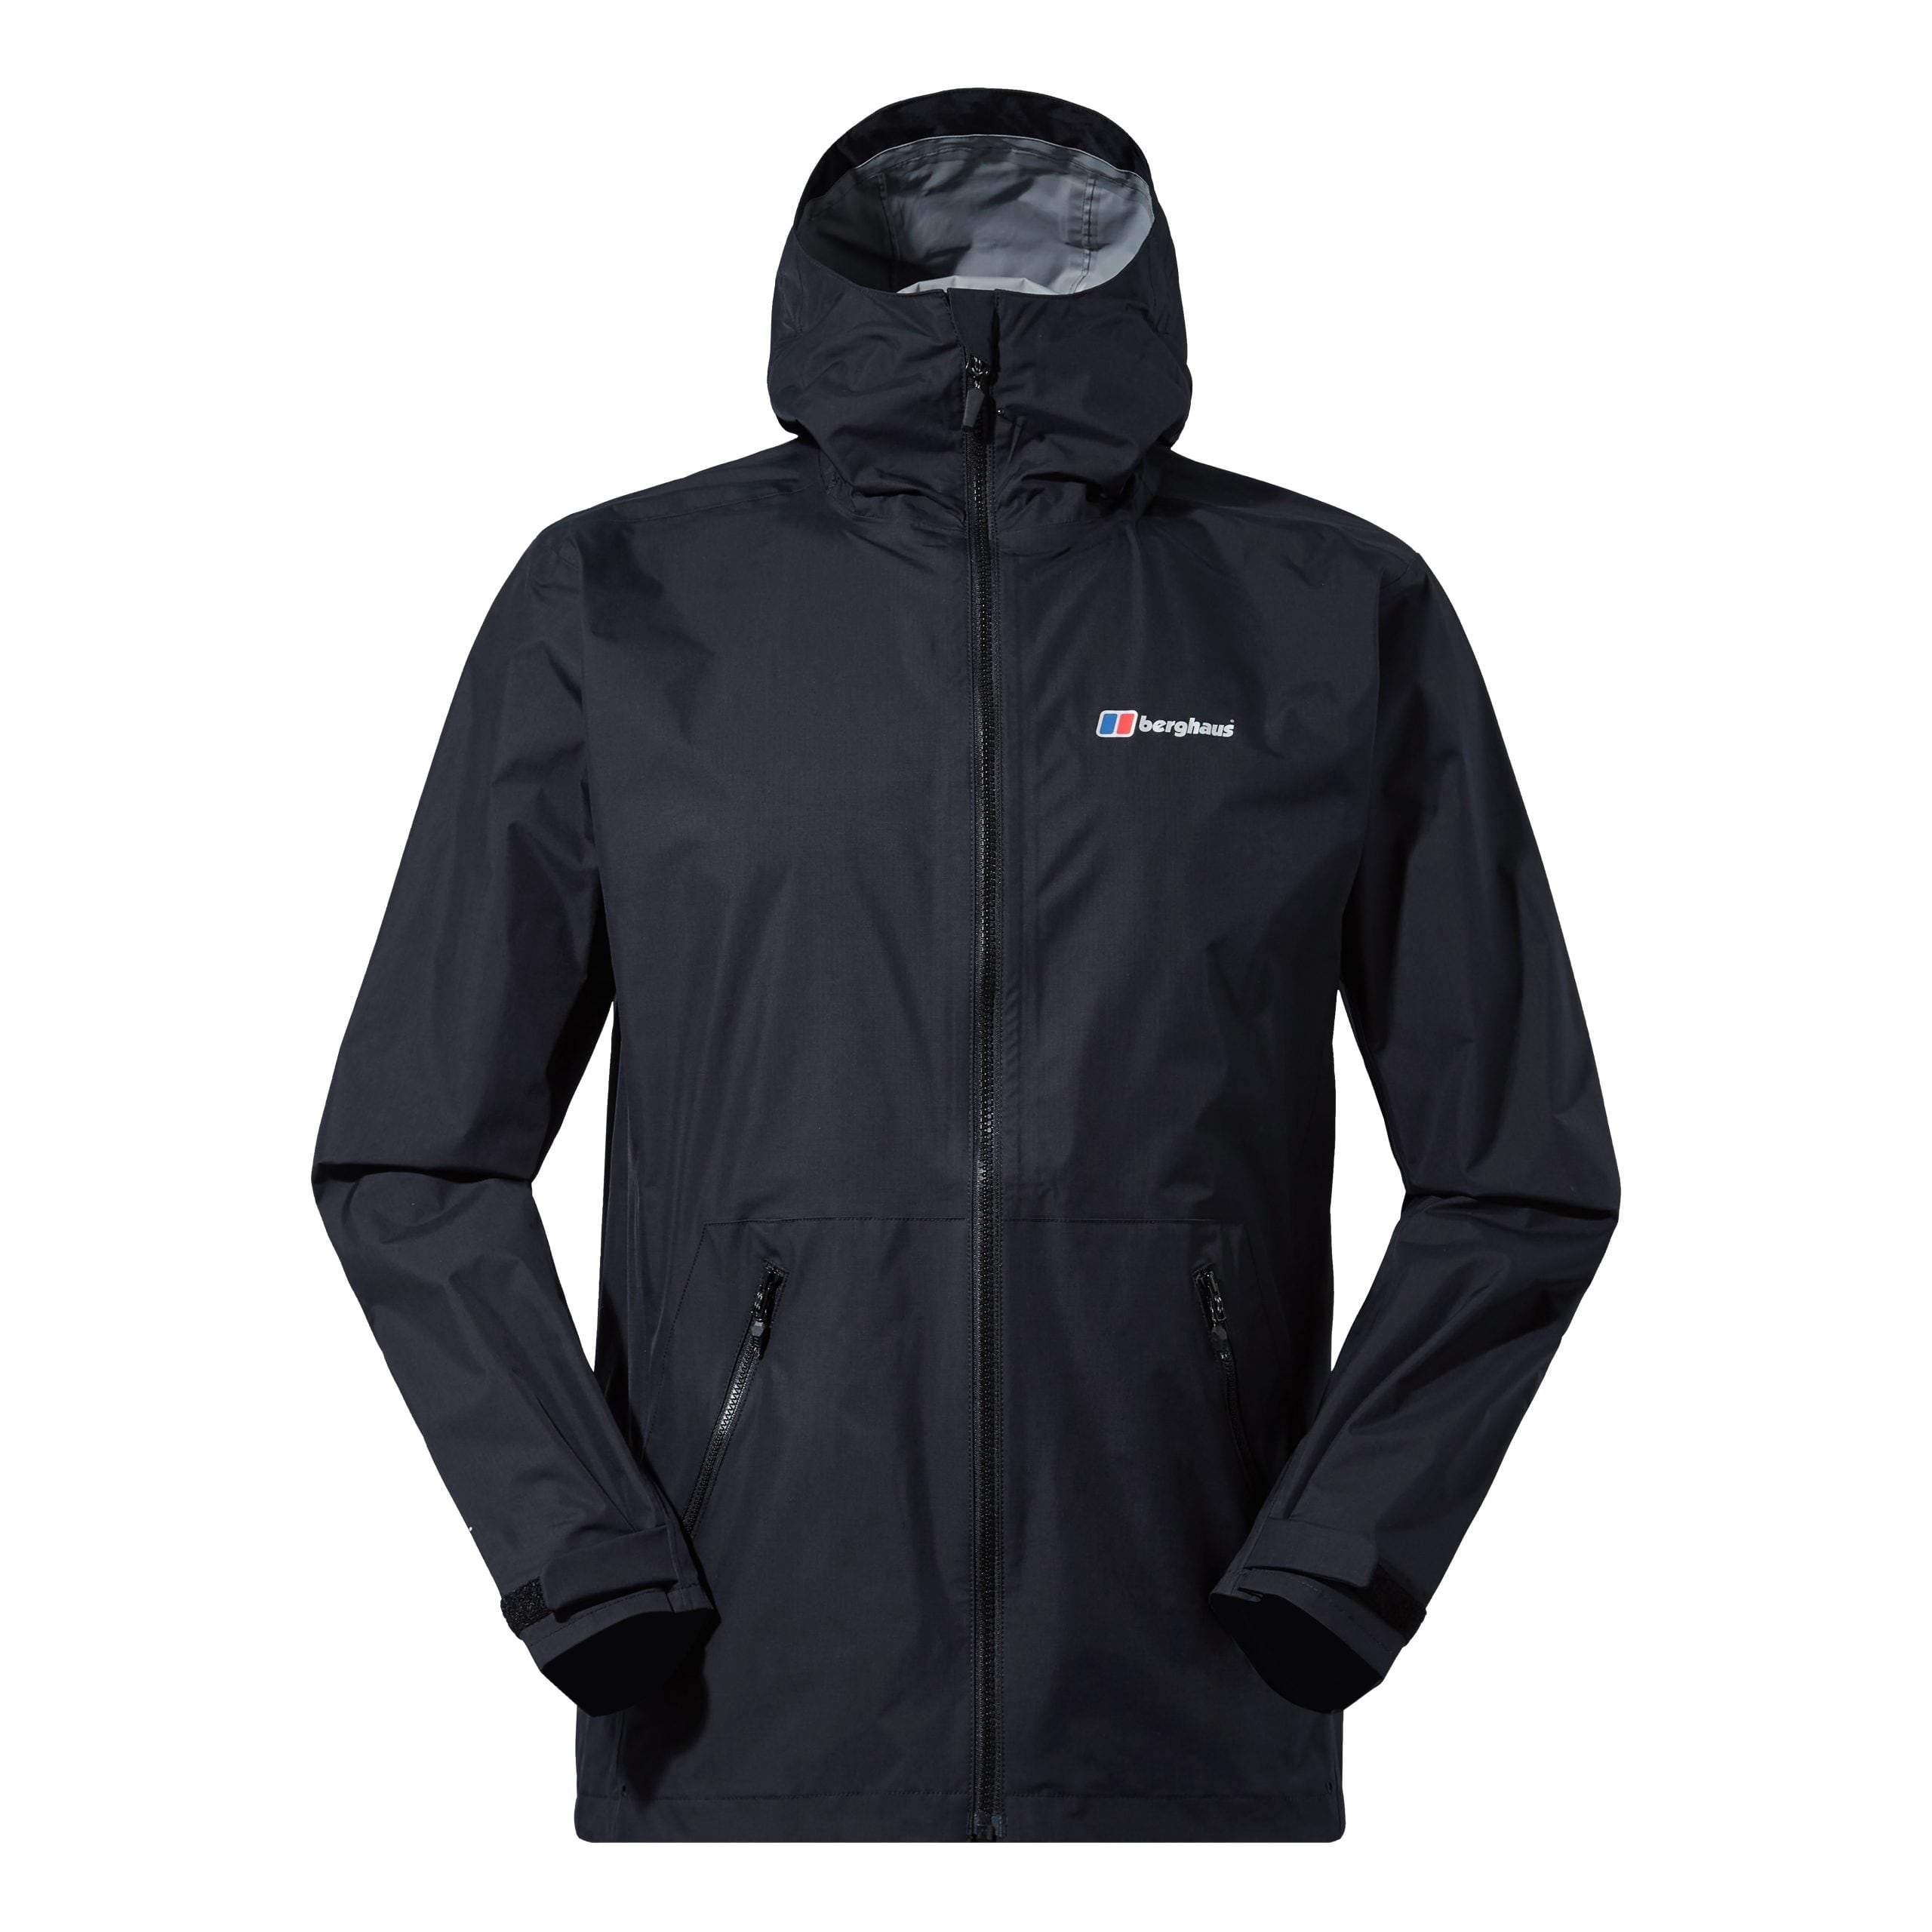 Berghaus Men’s Deluge Pro 2.0 Shell Jacket